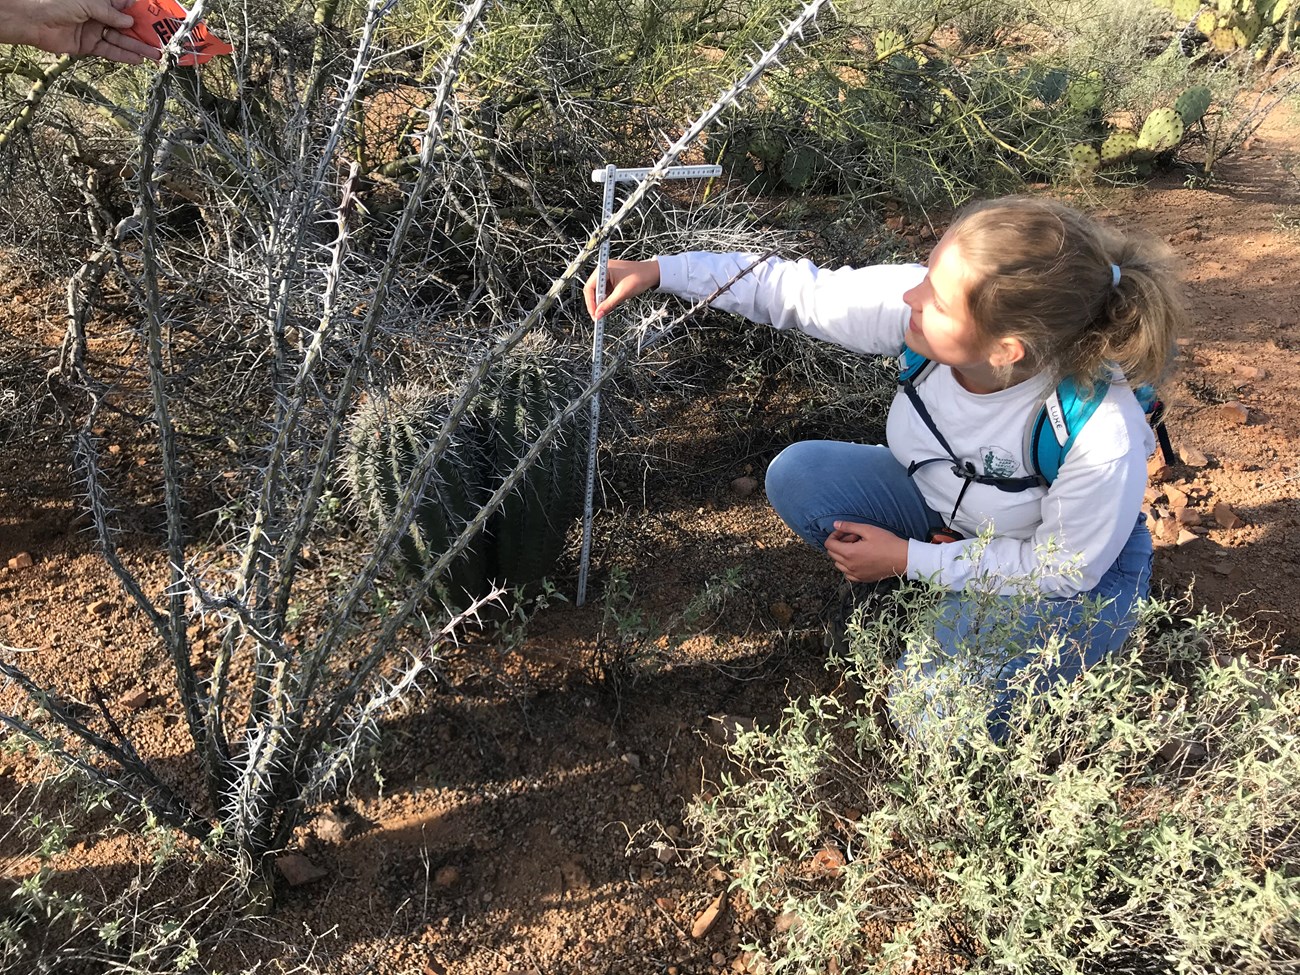 Volunteer measures small twin saguaro